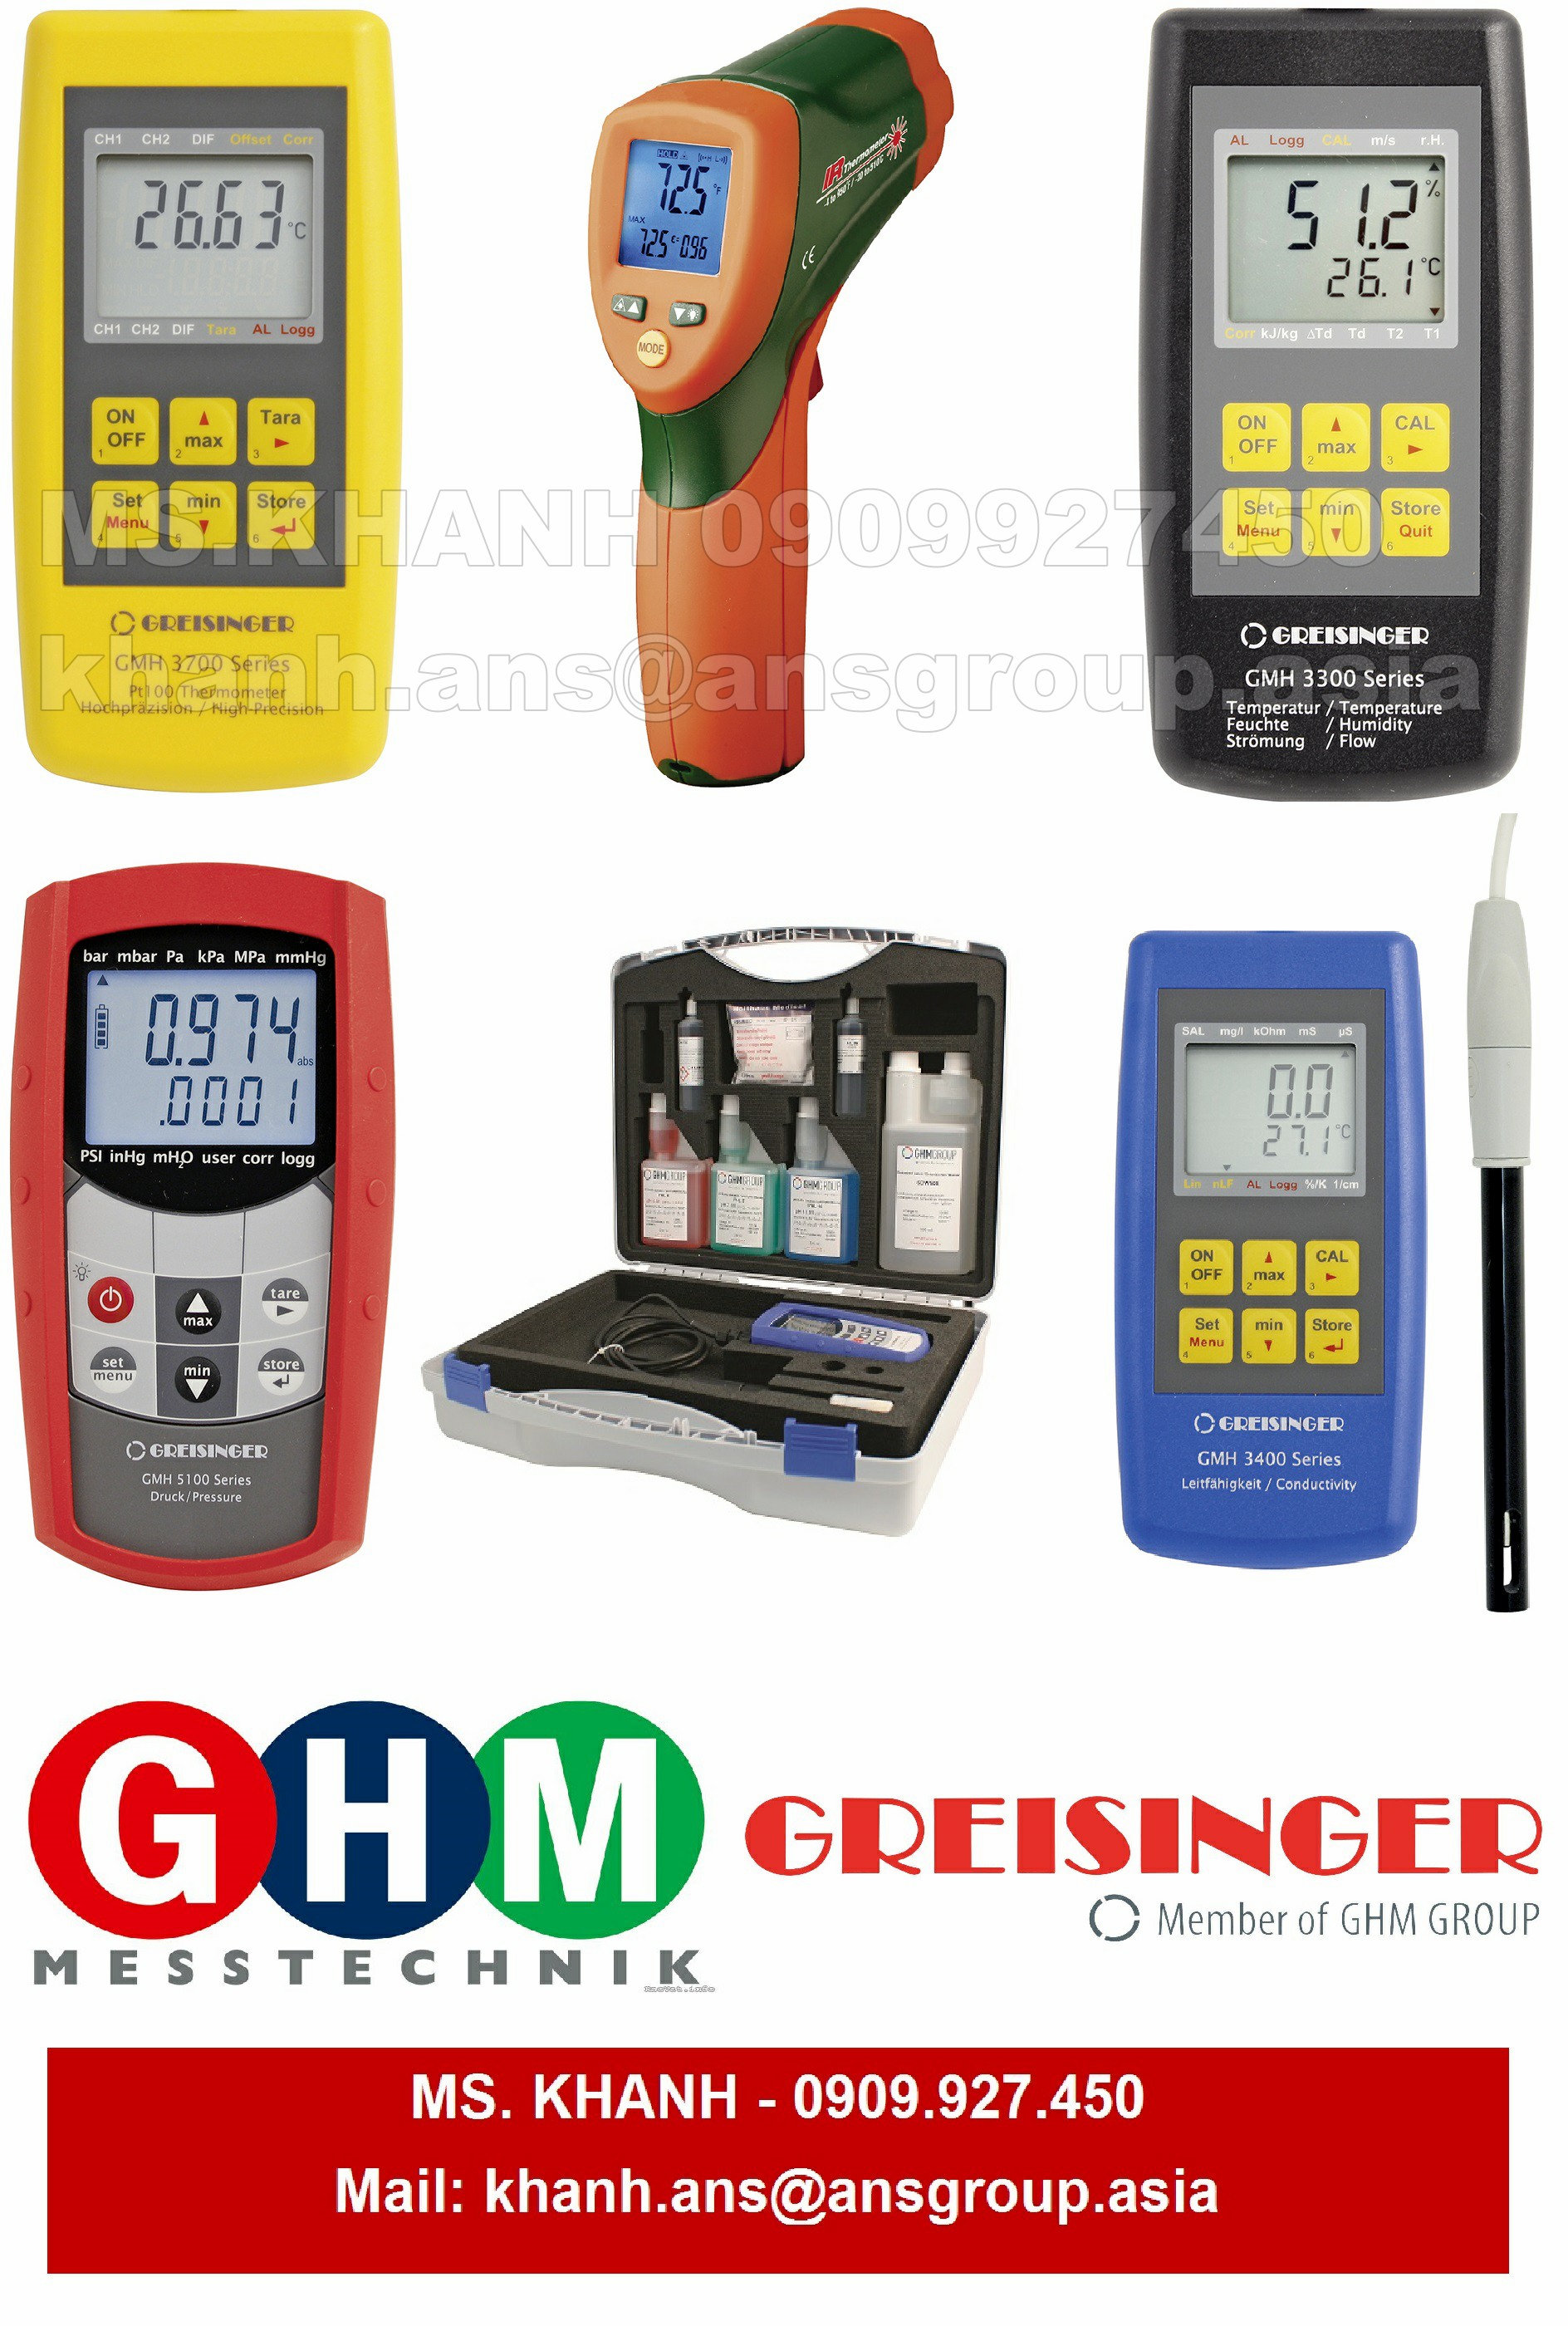 nhiet-ke-ky-thuat-so-hong-ngoai-gim-530-ms-infrared-digital-thermometer-greisinger-ghm-vietnam.png